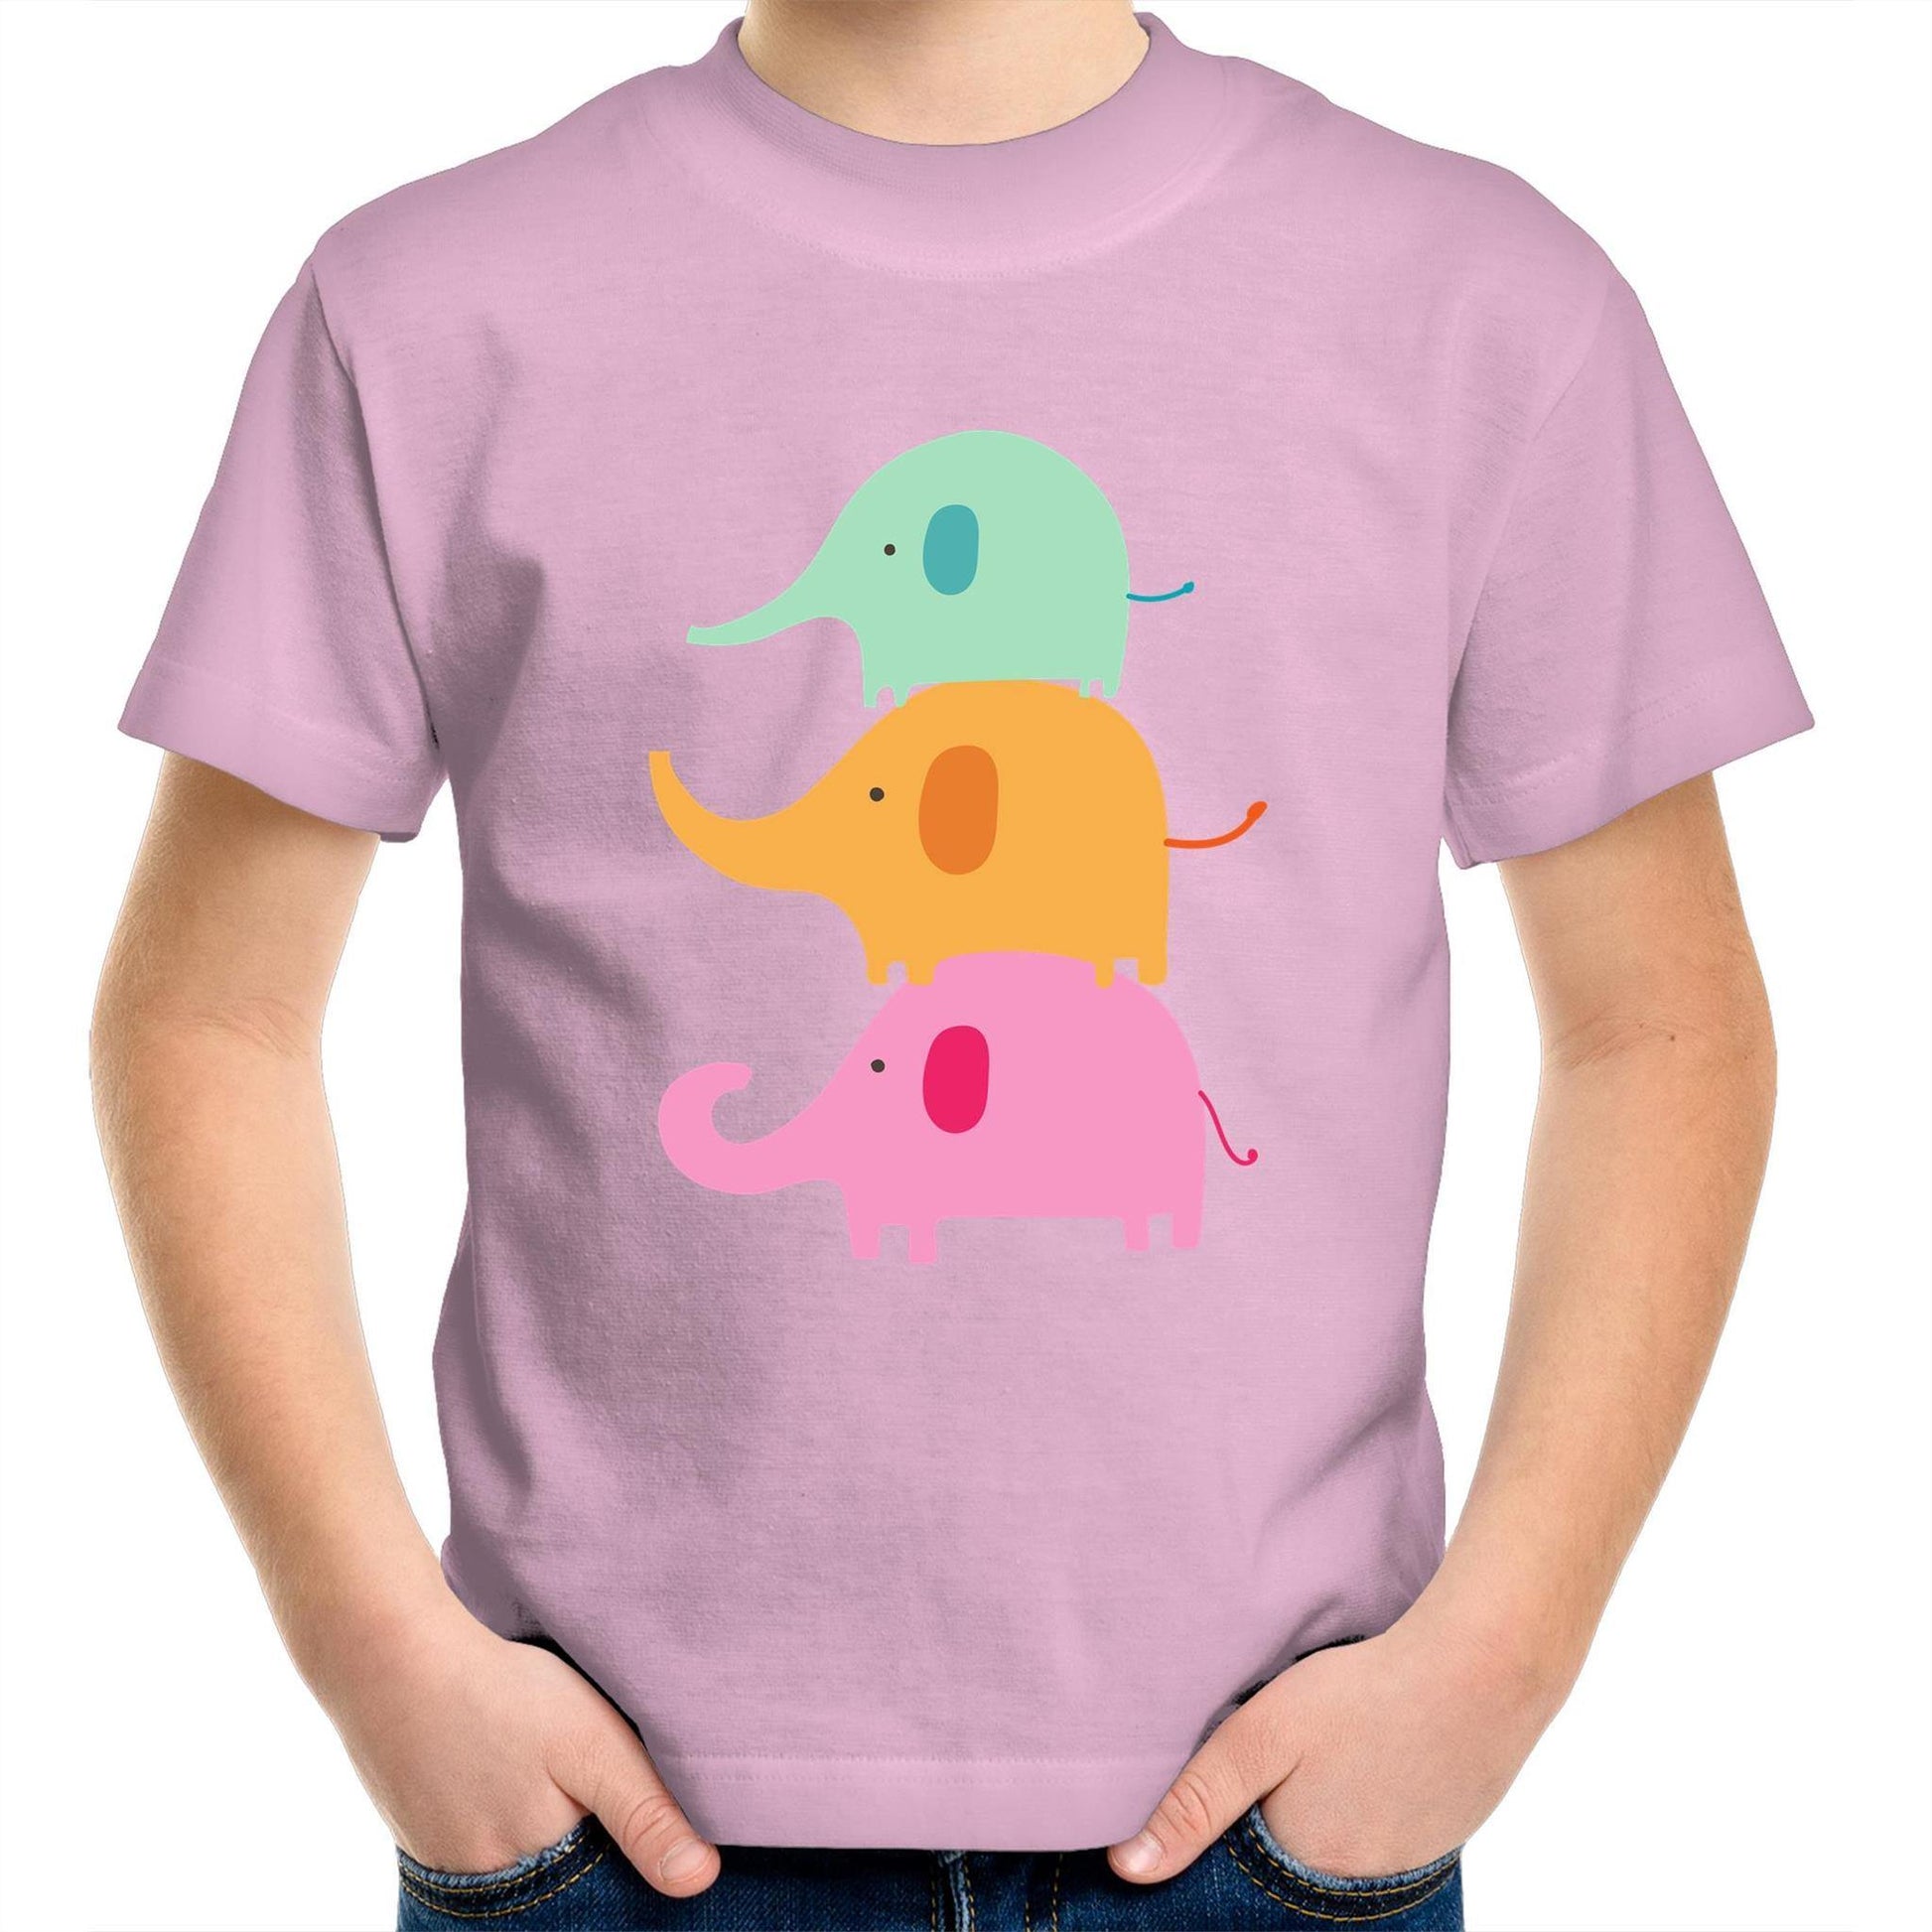 Three Cute Elephants - Kids Youth Crew T-Shirt Pink Kids Youth T-shirt animal